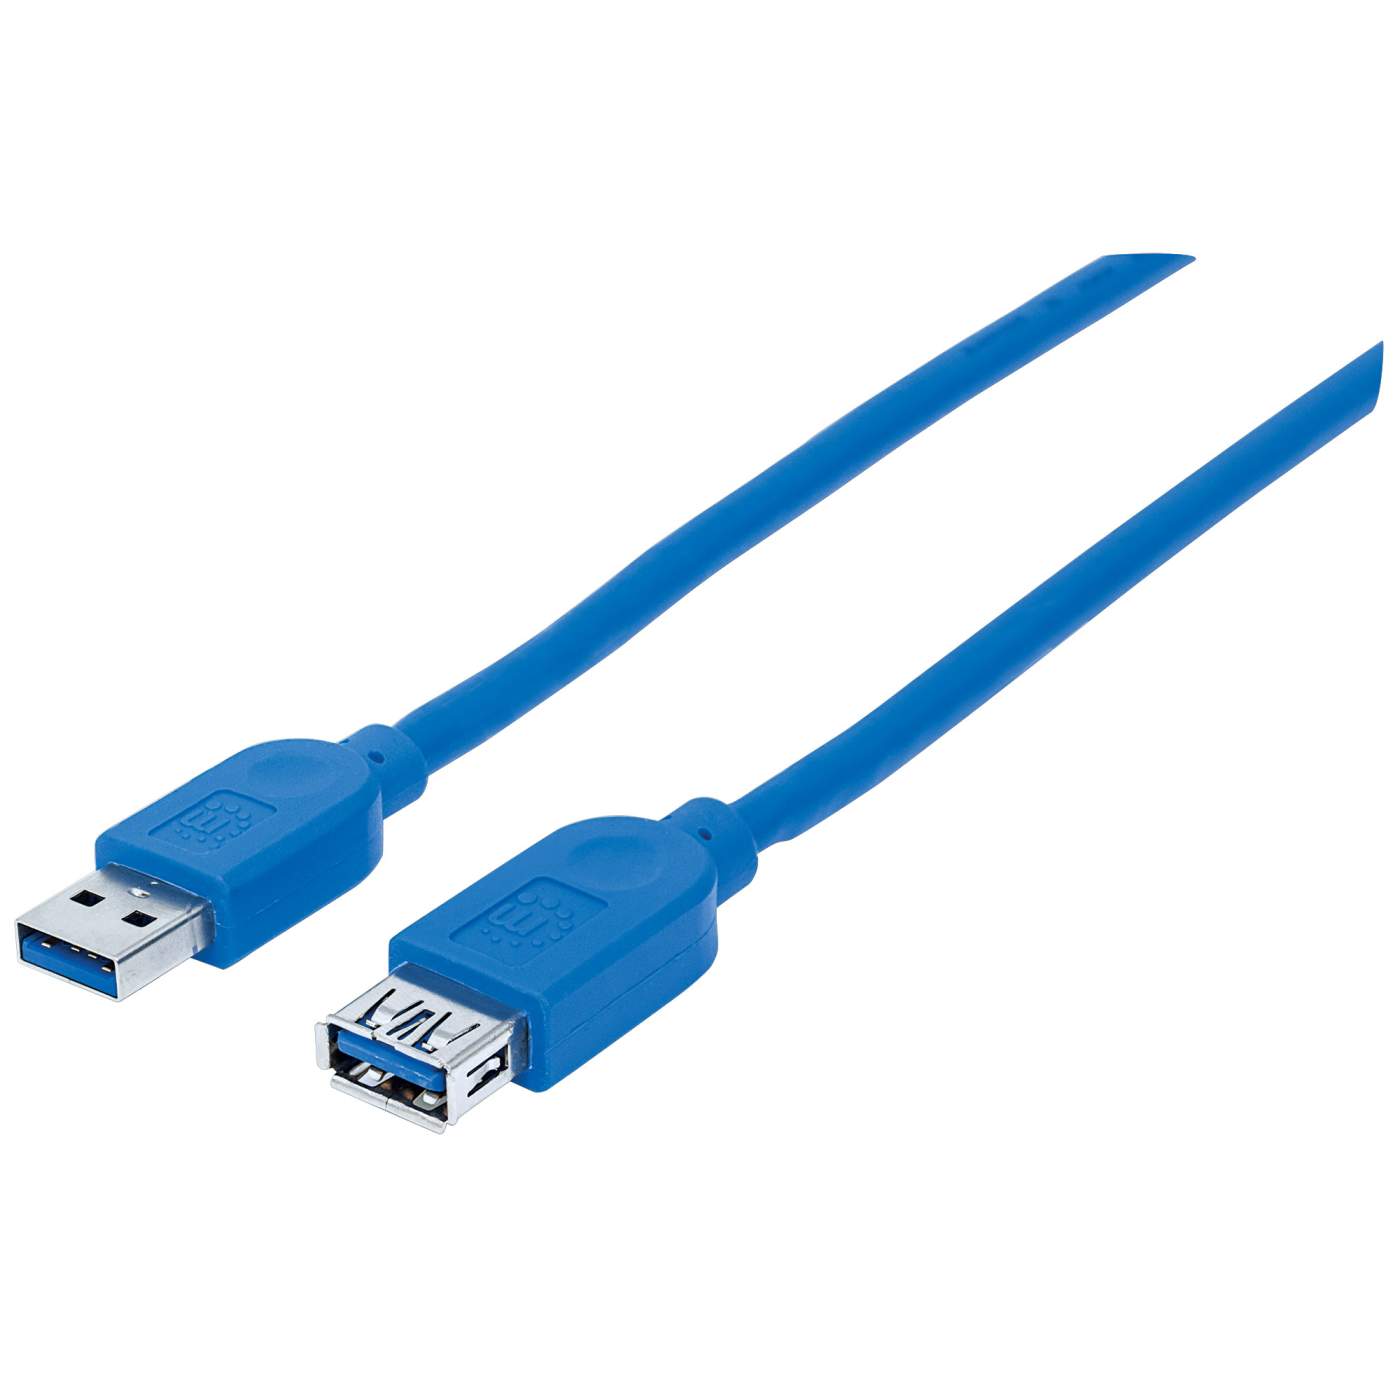 2m Black USB 3.0 Extension Cable M/F - USB 3.0 Cables, Cables